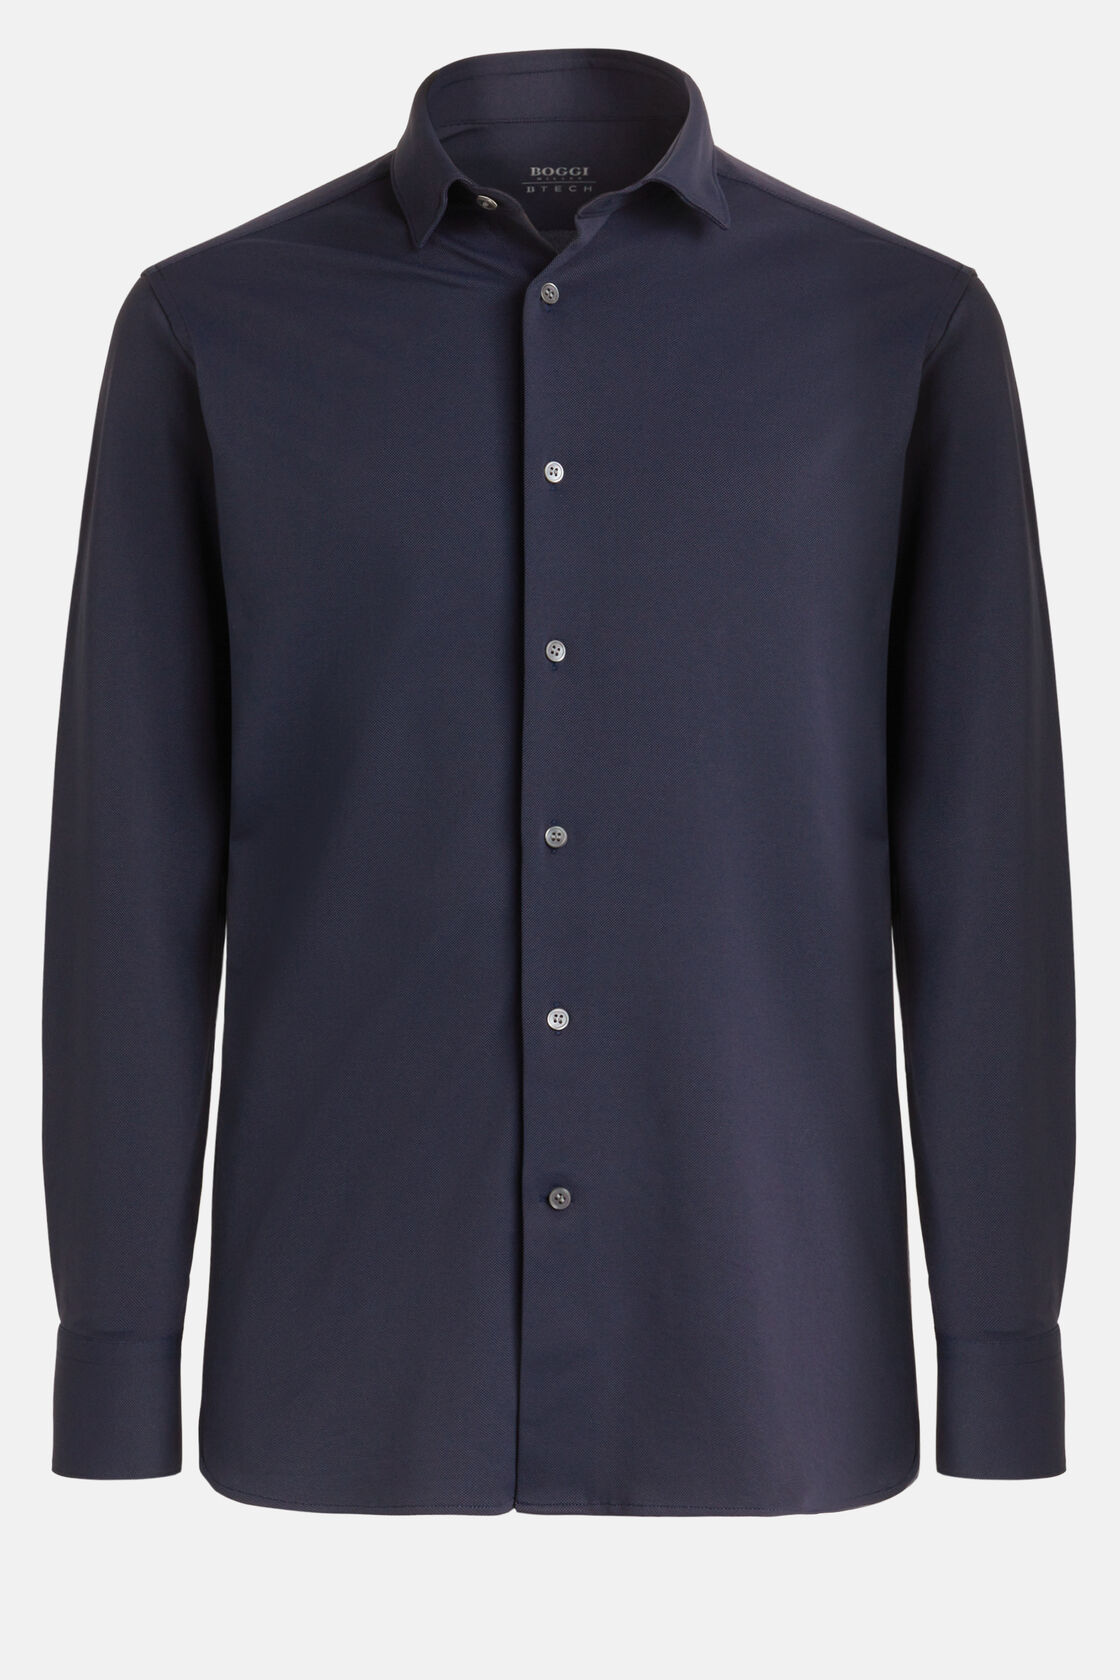 Poloshirt Aus Nylon-Piqué-Stretch Slim, Navy blau, hi-res